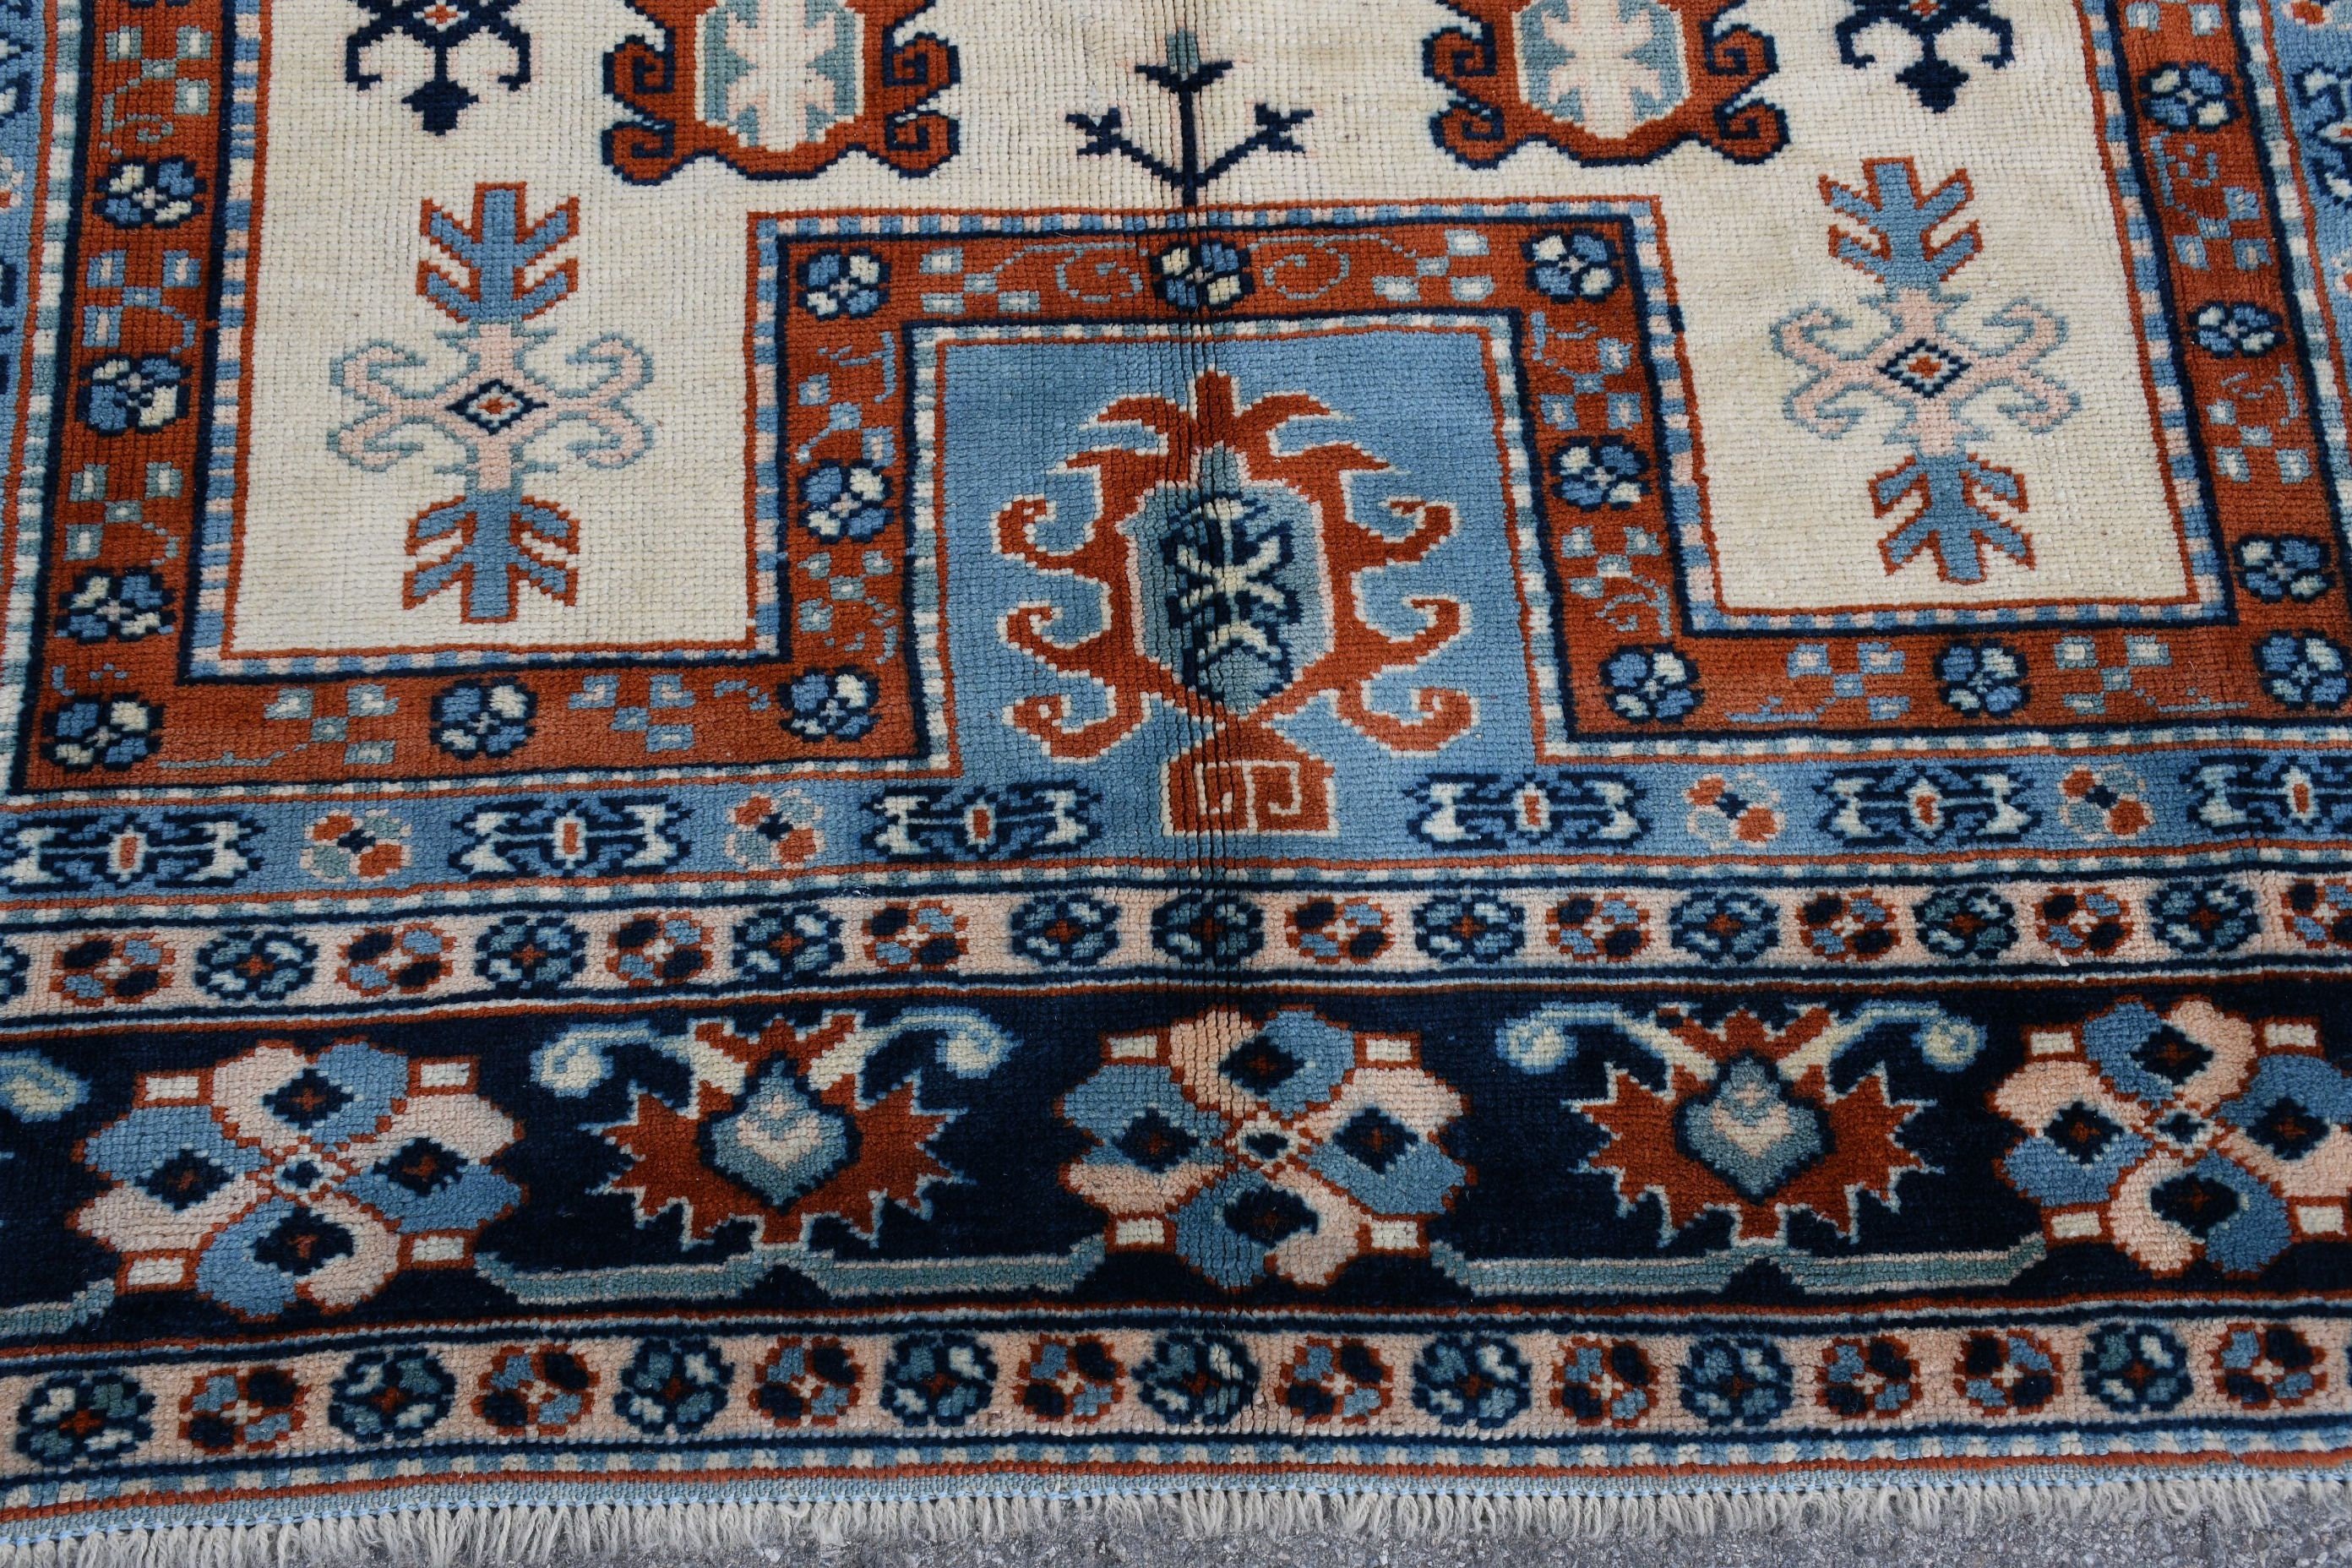 Living Room Rugs, Cool Rug, Turkish Rug, Ethnic Rugs, 5.8x8.2 ft Large Rugs, Dining Room Rugs, Blue Kitchen Rugs, Vintage Rug